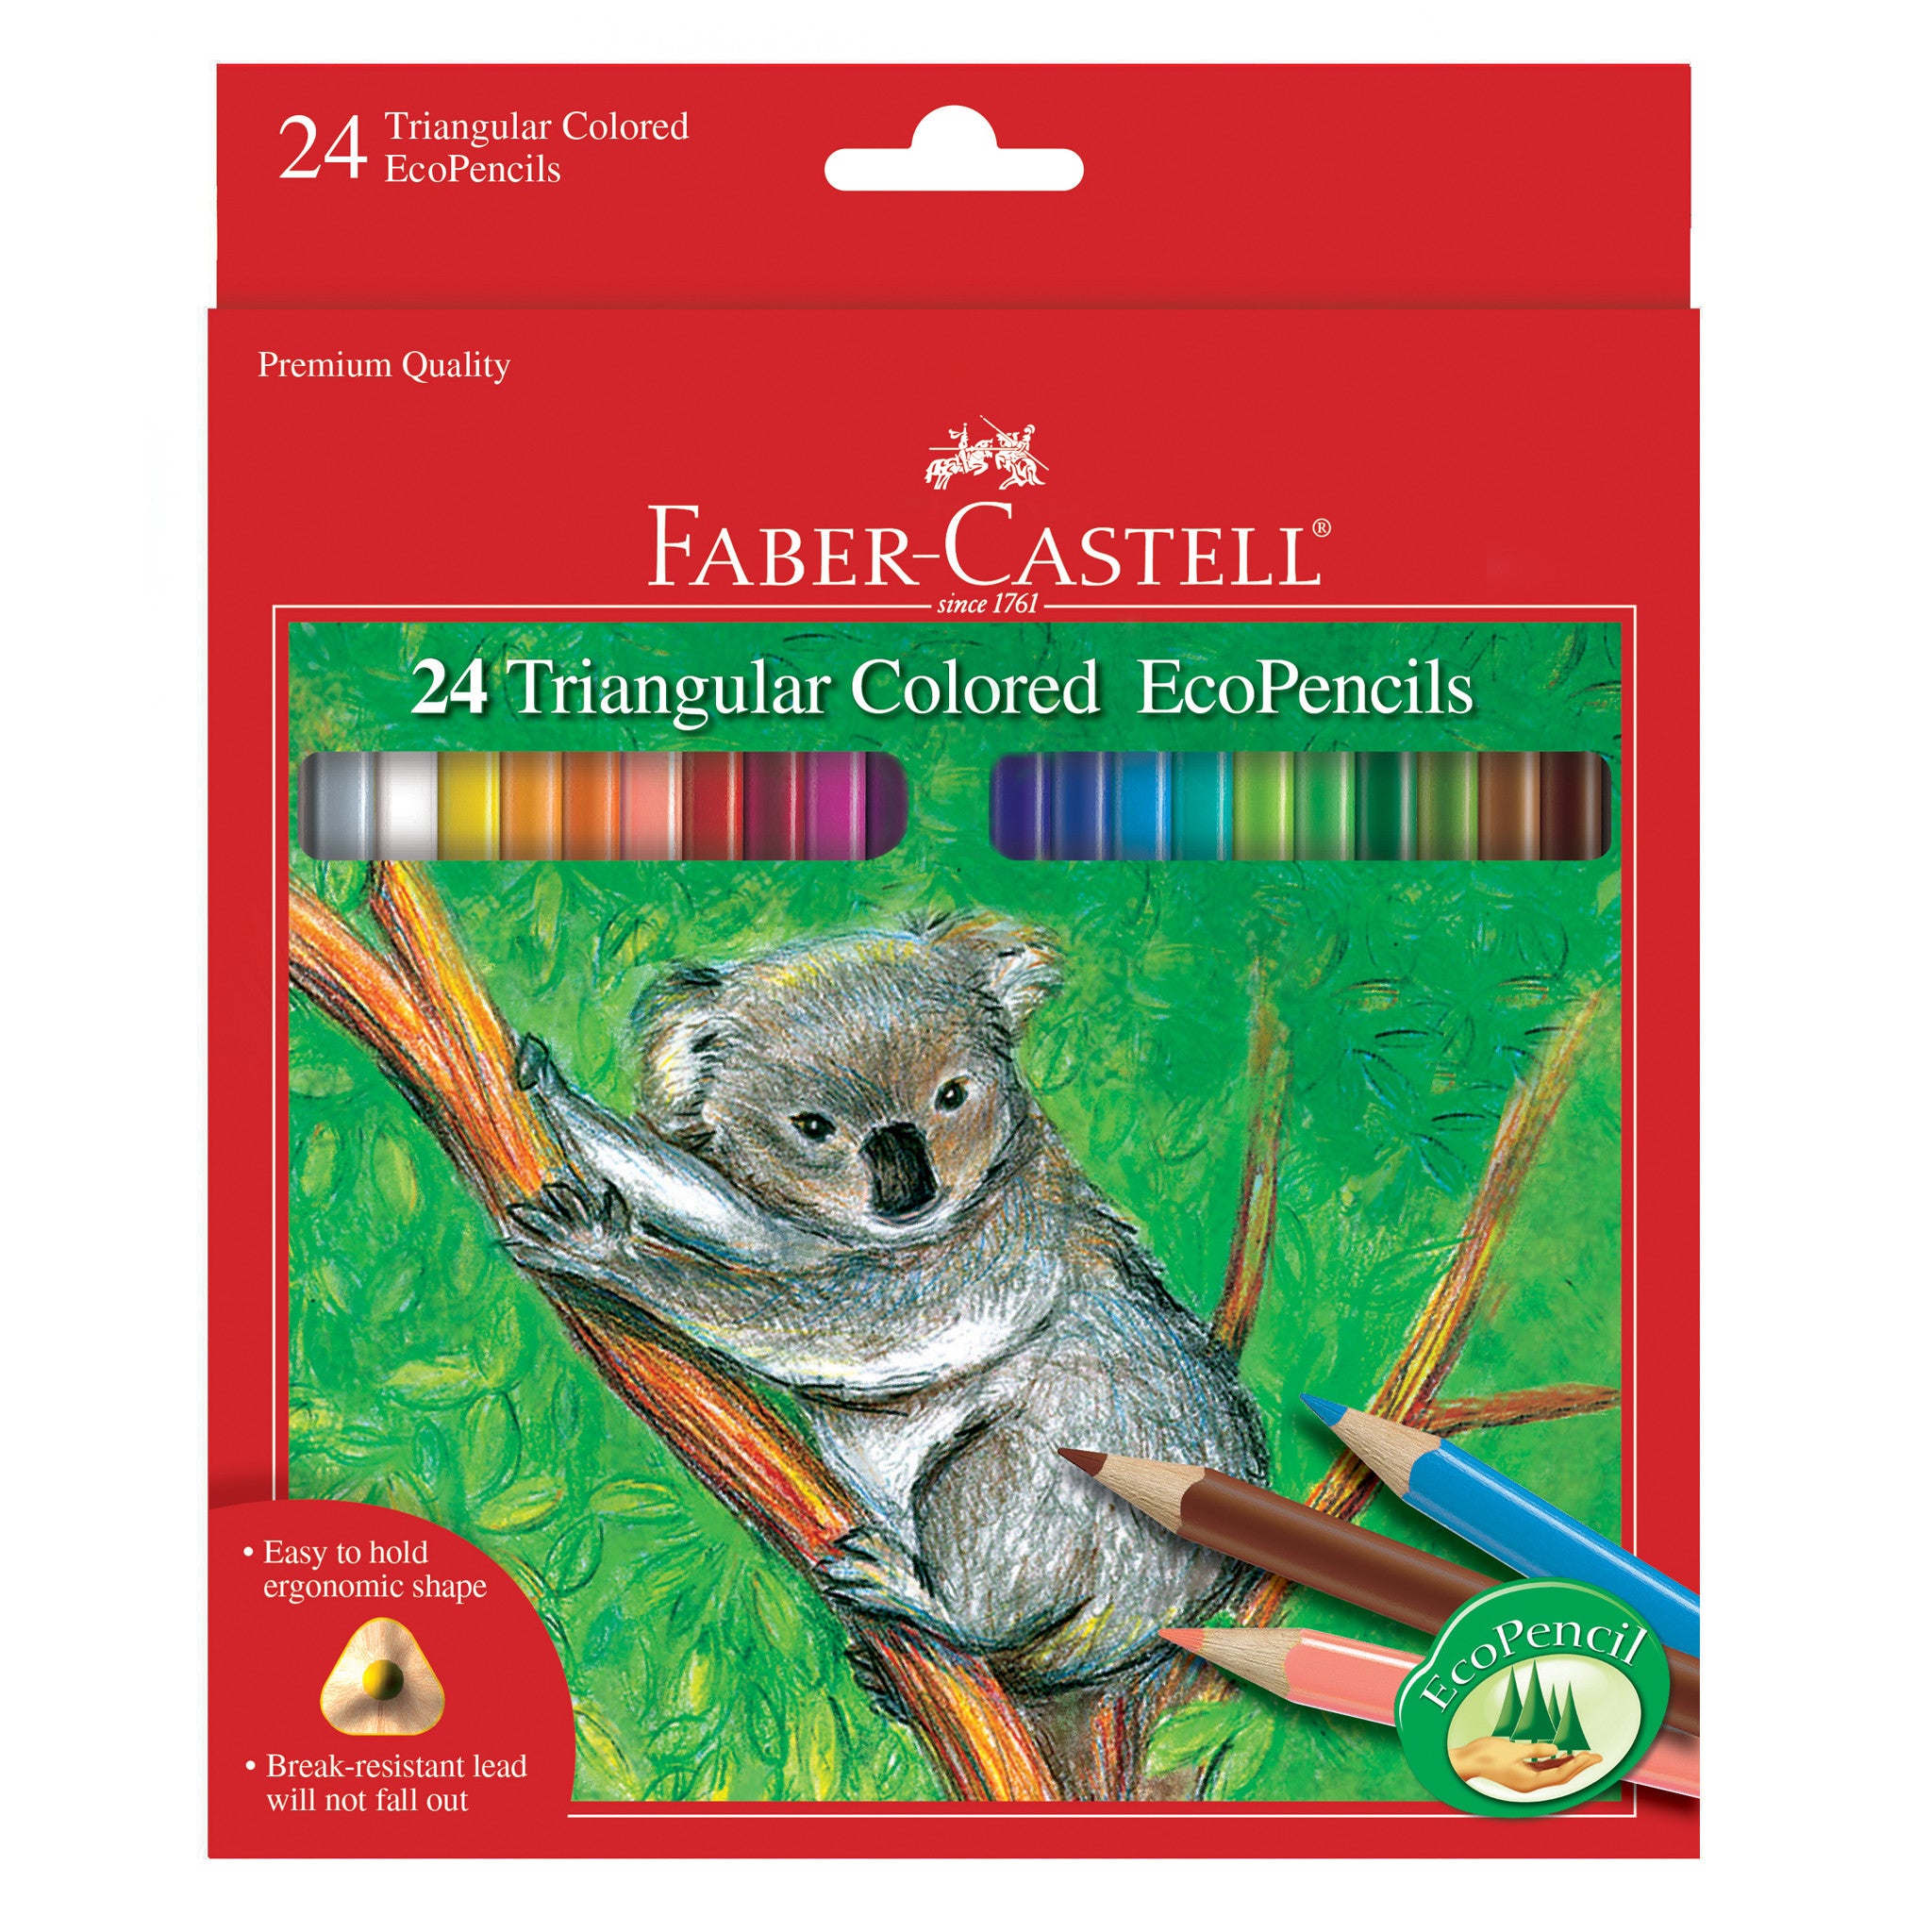 Faber-Castell Triangular Colored EcoPencils